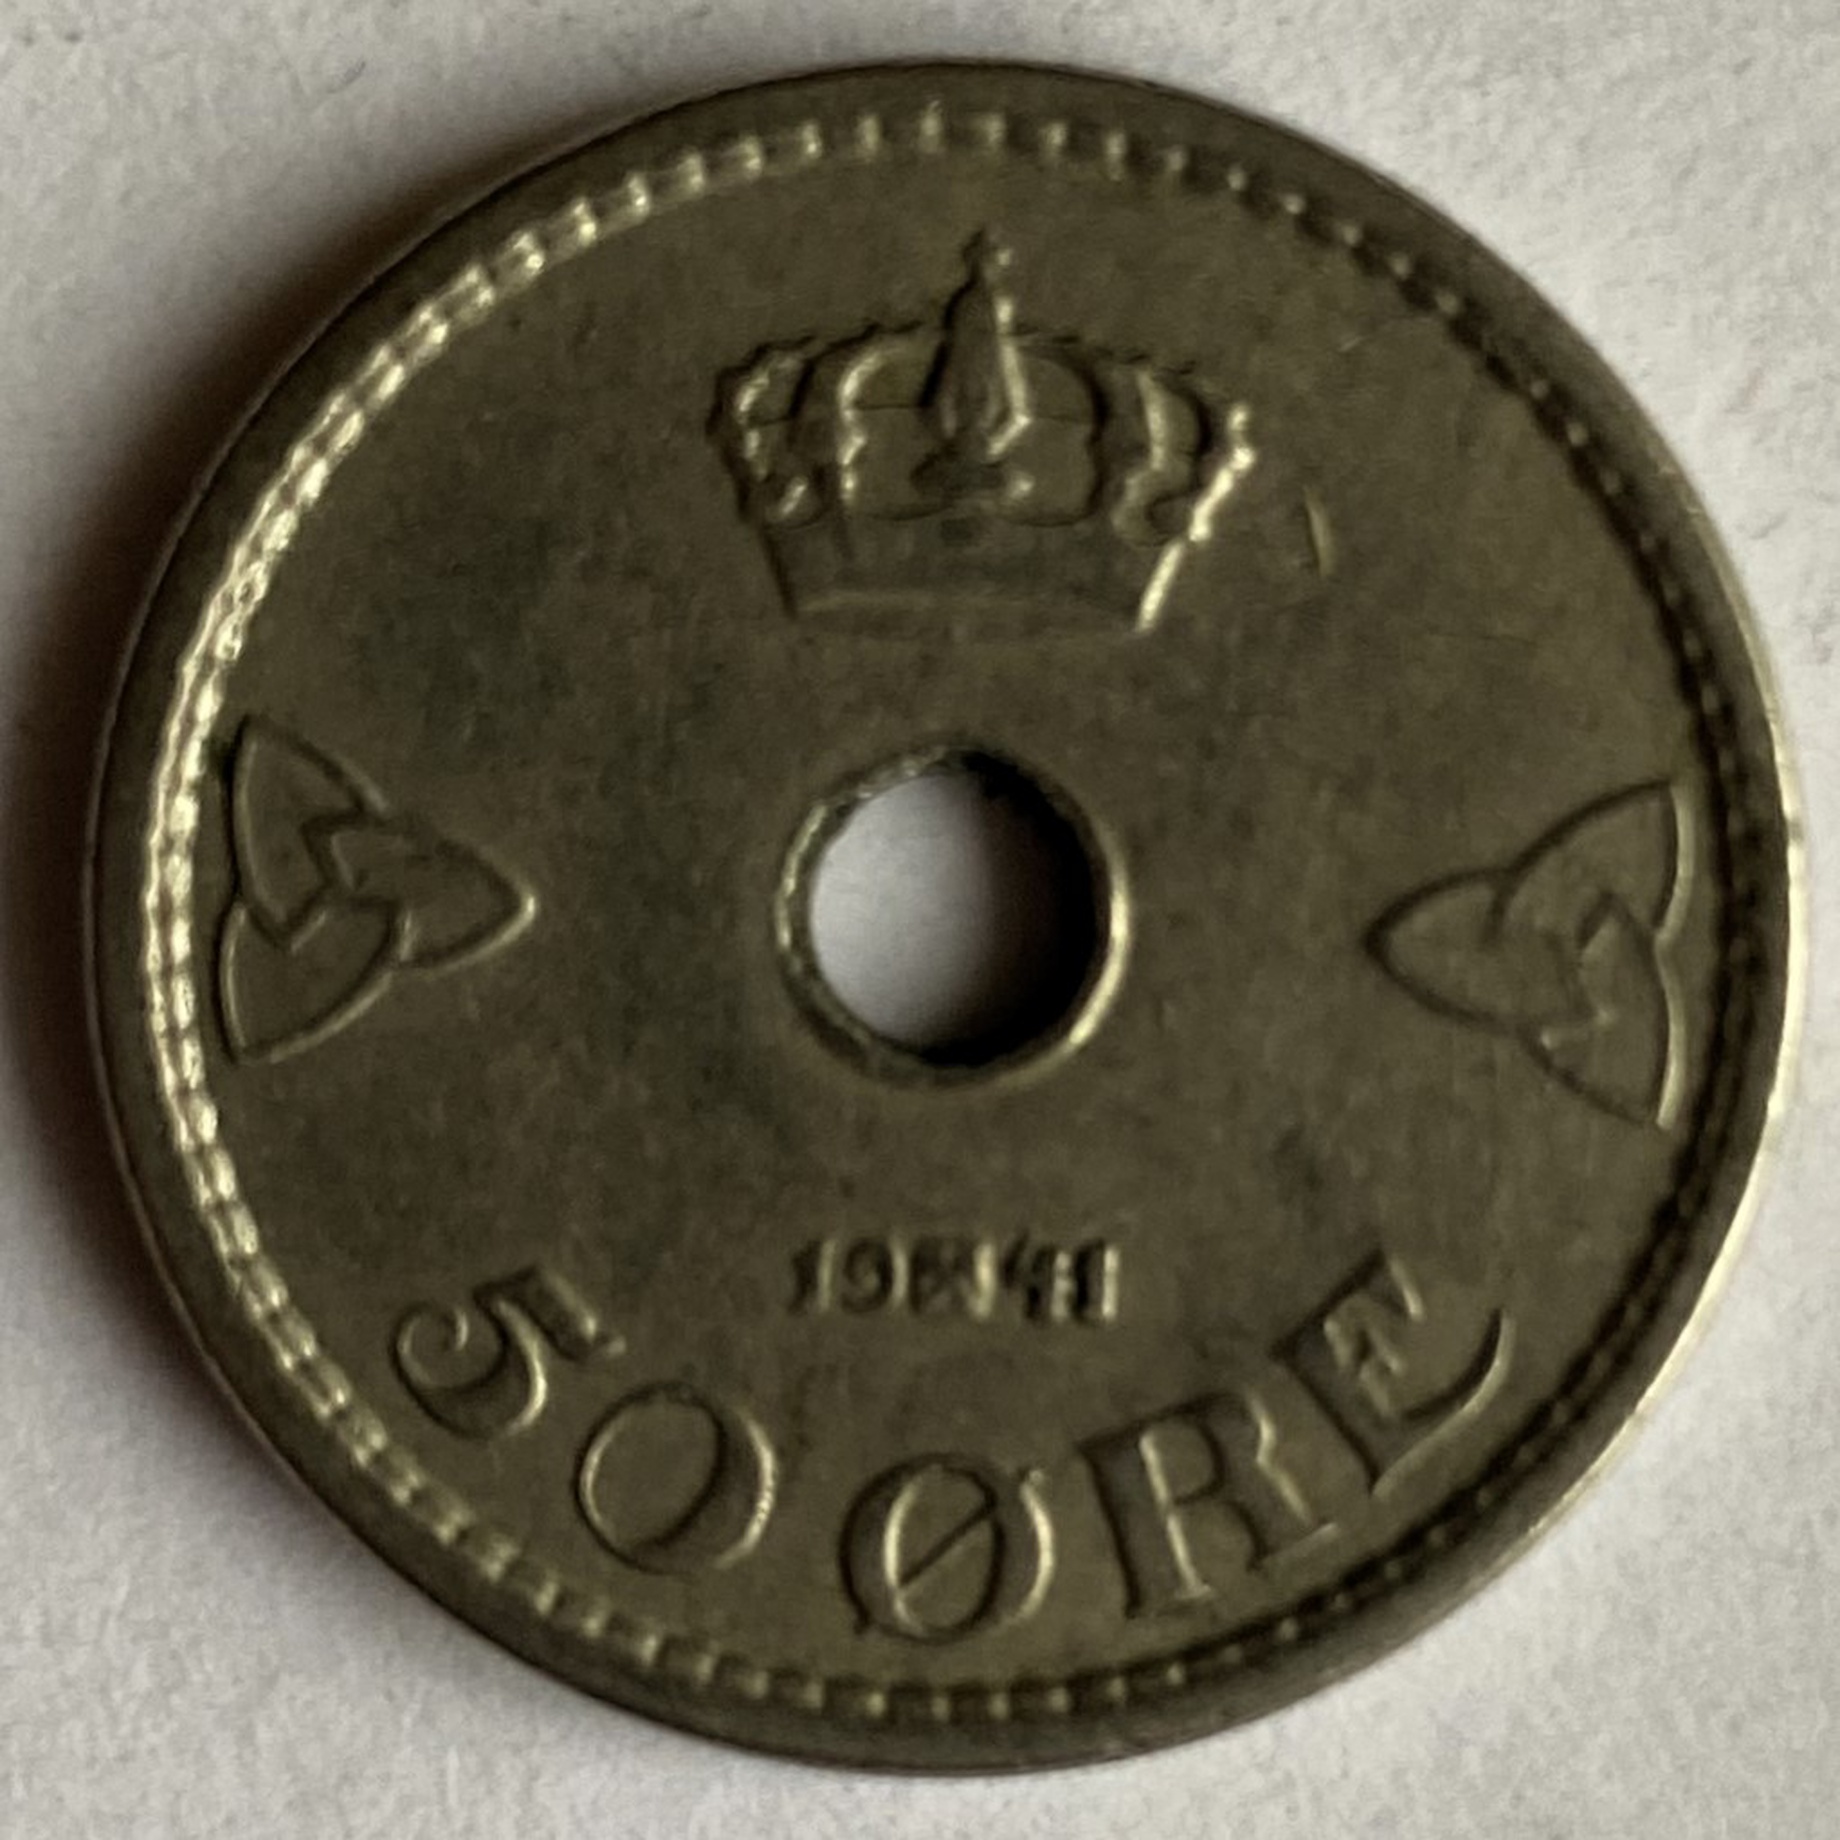 Иностранная монета 50 Оре 1941 год Норвегия